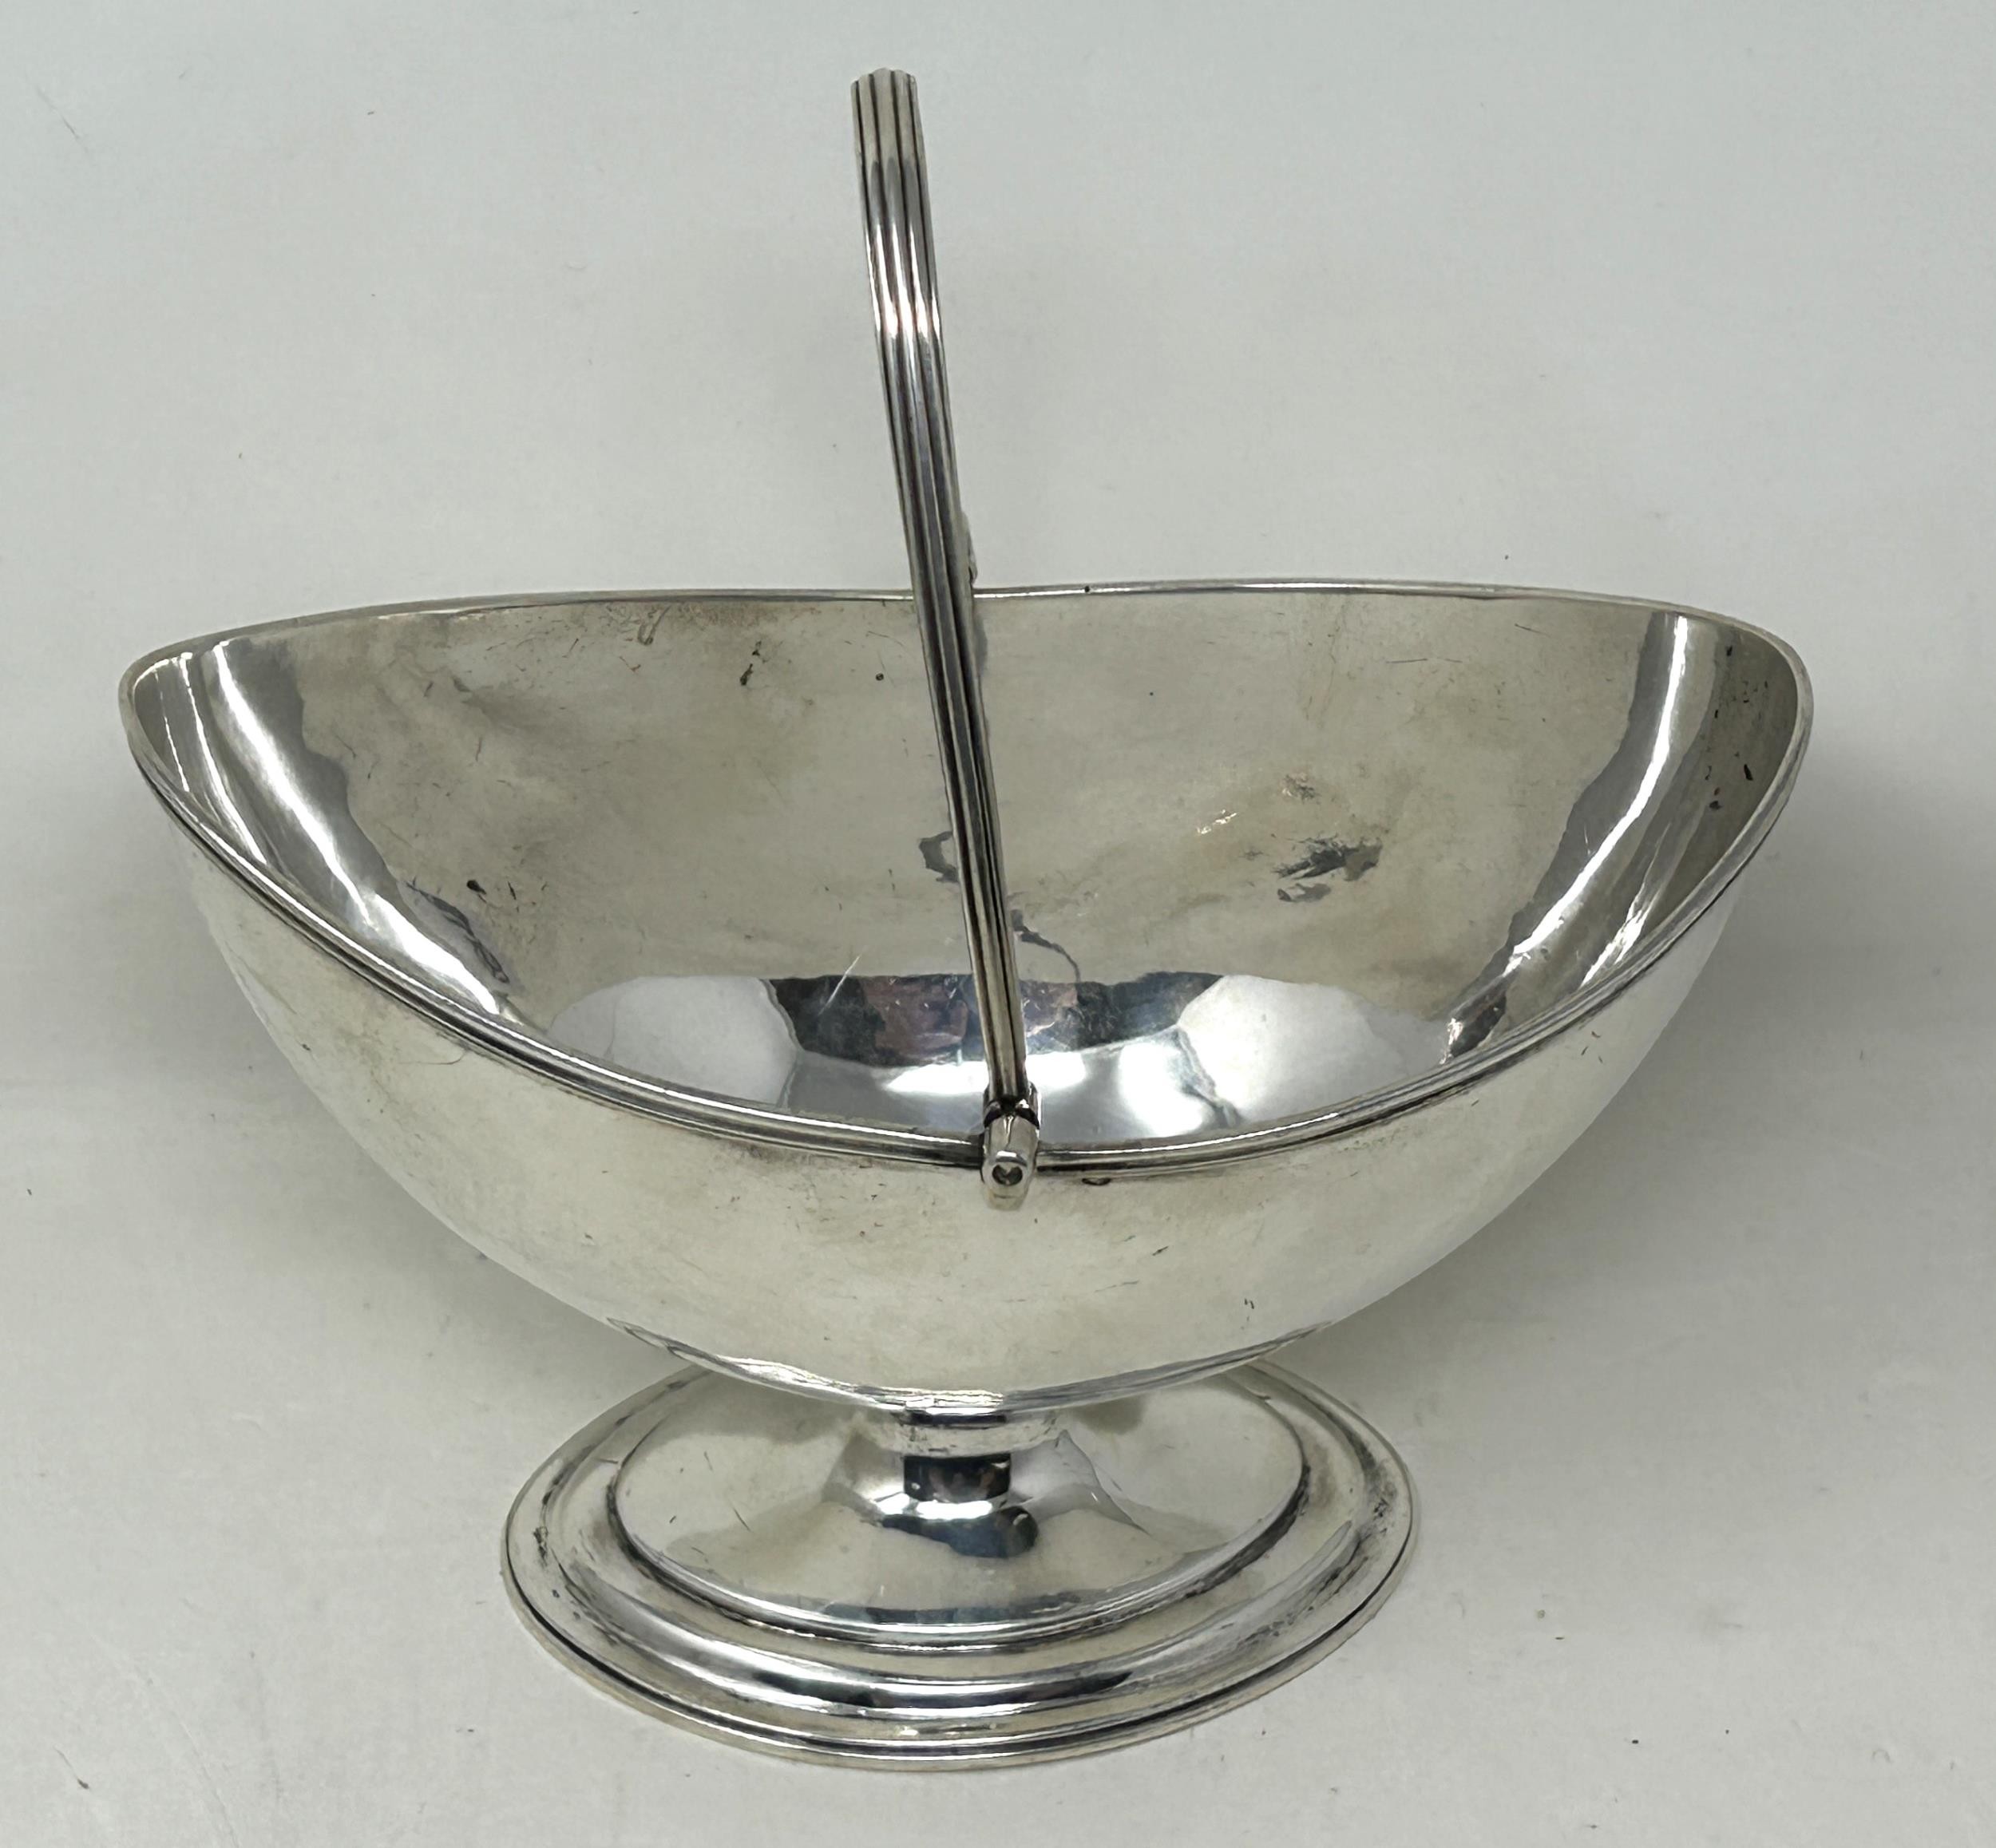 A George III silver swing handle sugar bowl, London 1786, 8.73 ozt - Image 2 of 4